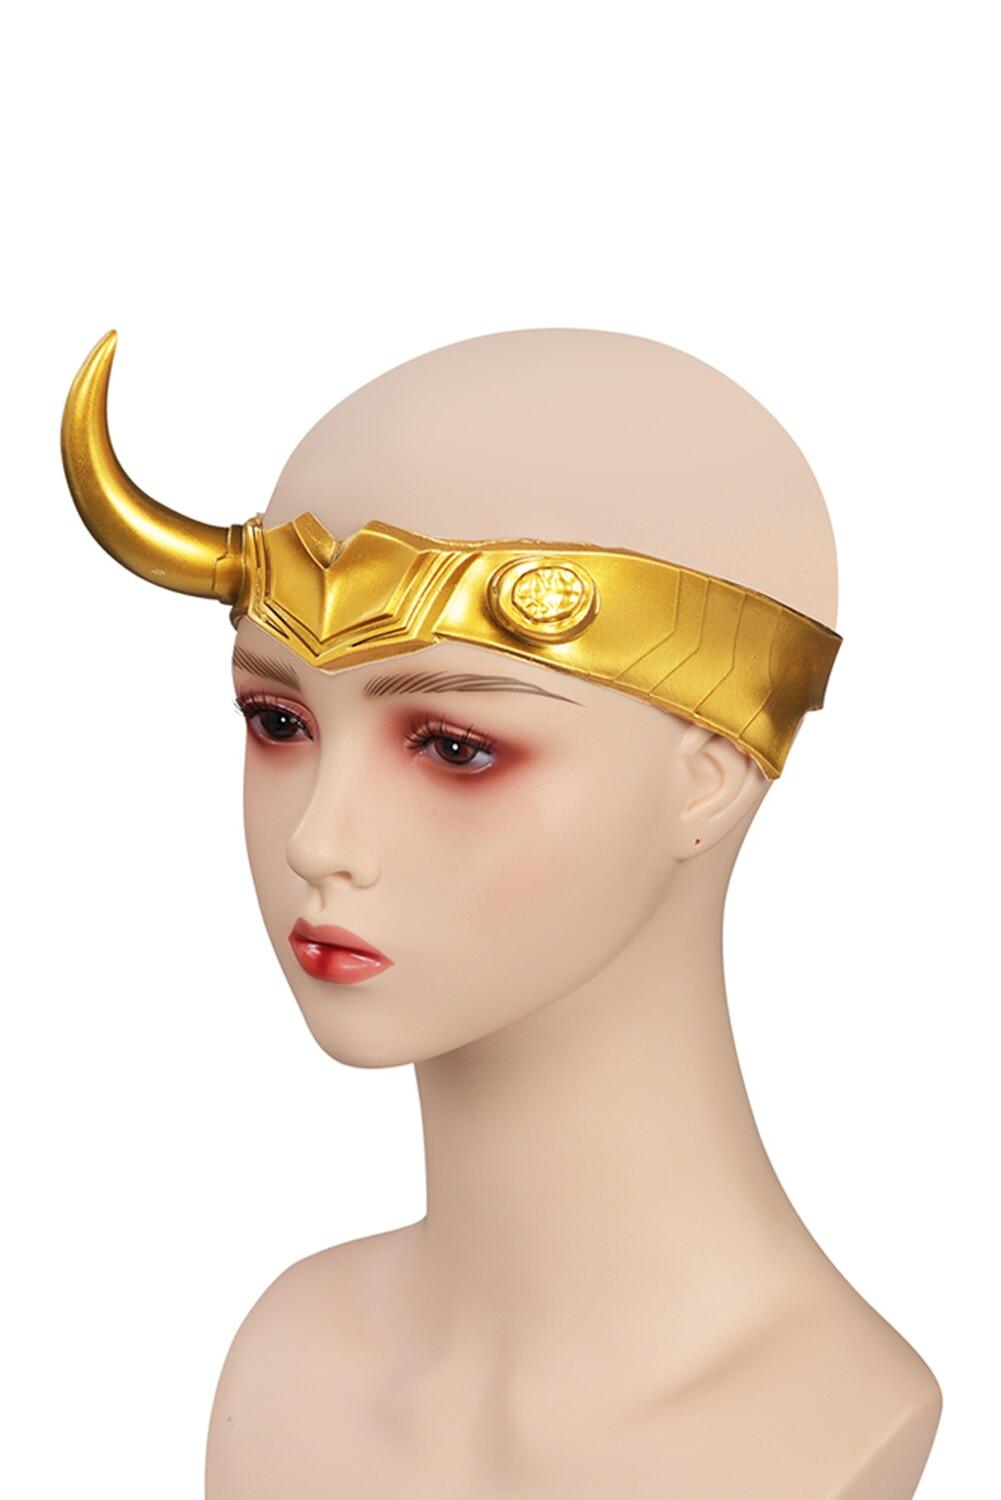 Lady Loki Sylvie Headwear Thor Ragnarok Cosplay Costume Essories Women Man